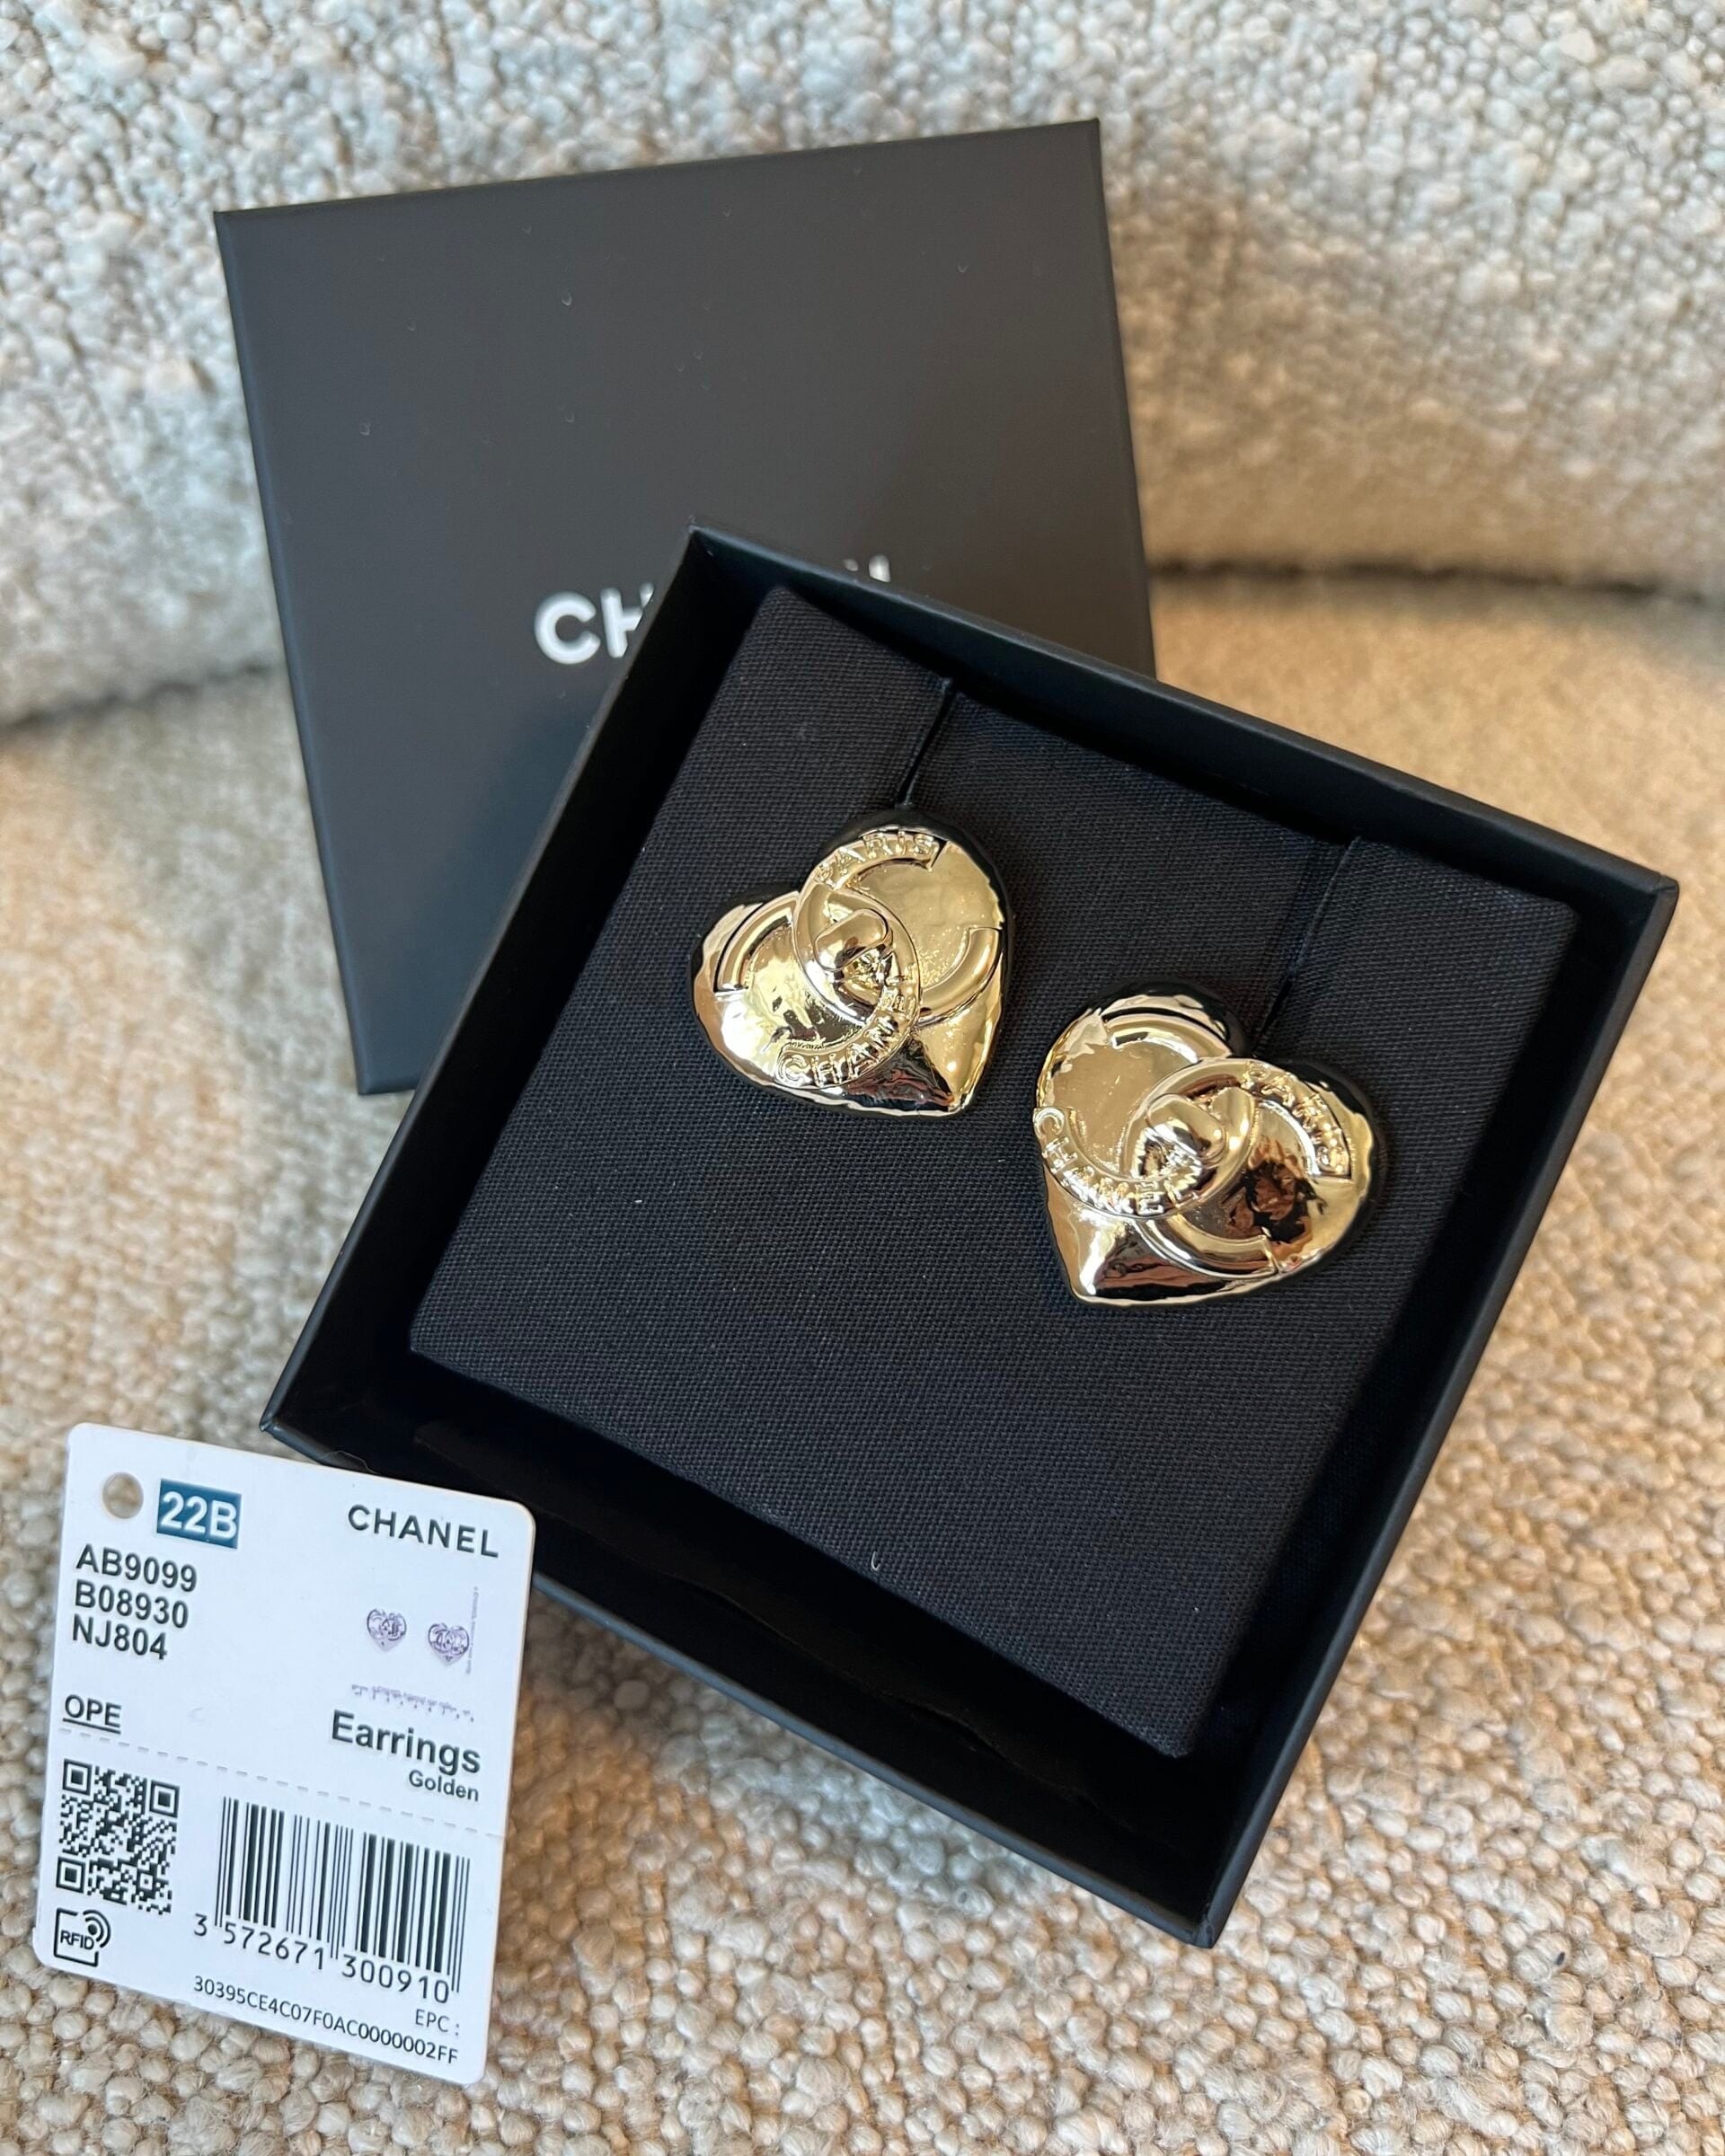 CHANEL Earrings Gold 22B Gold Heart CC Turnlock Earring Large - Redeluxe